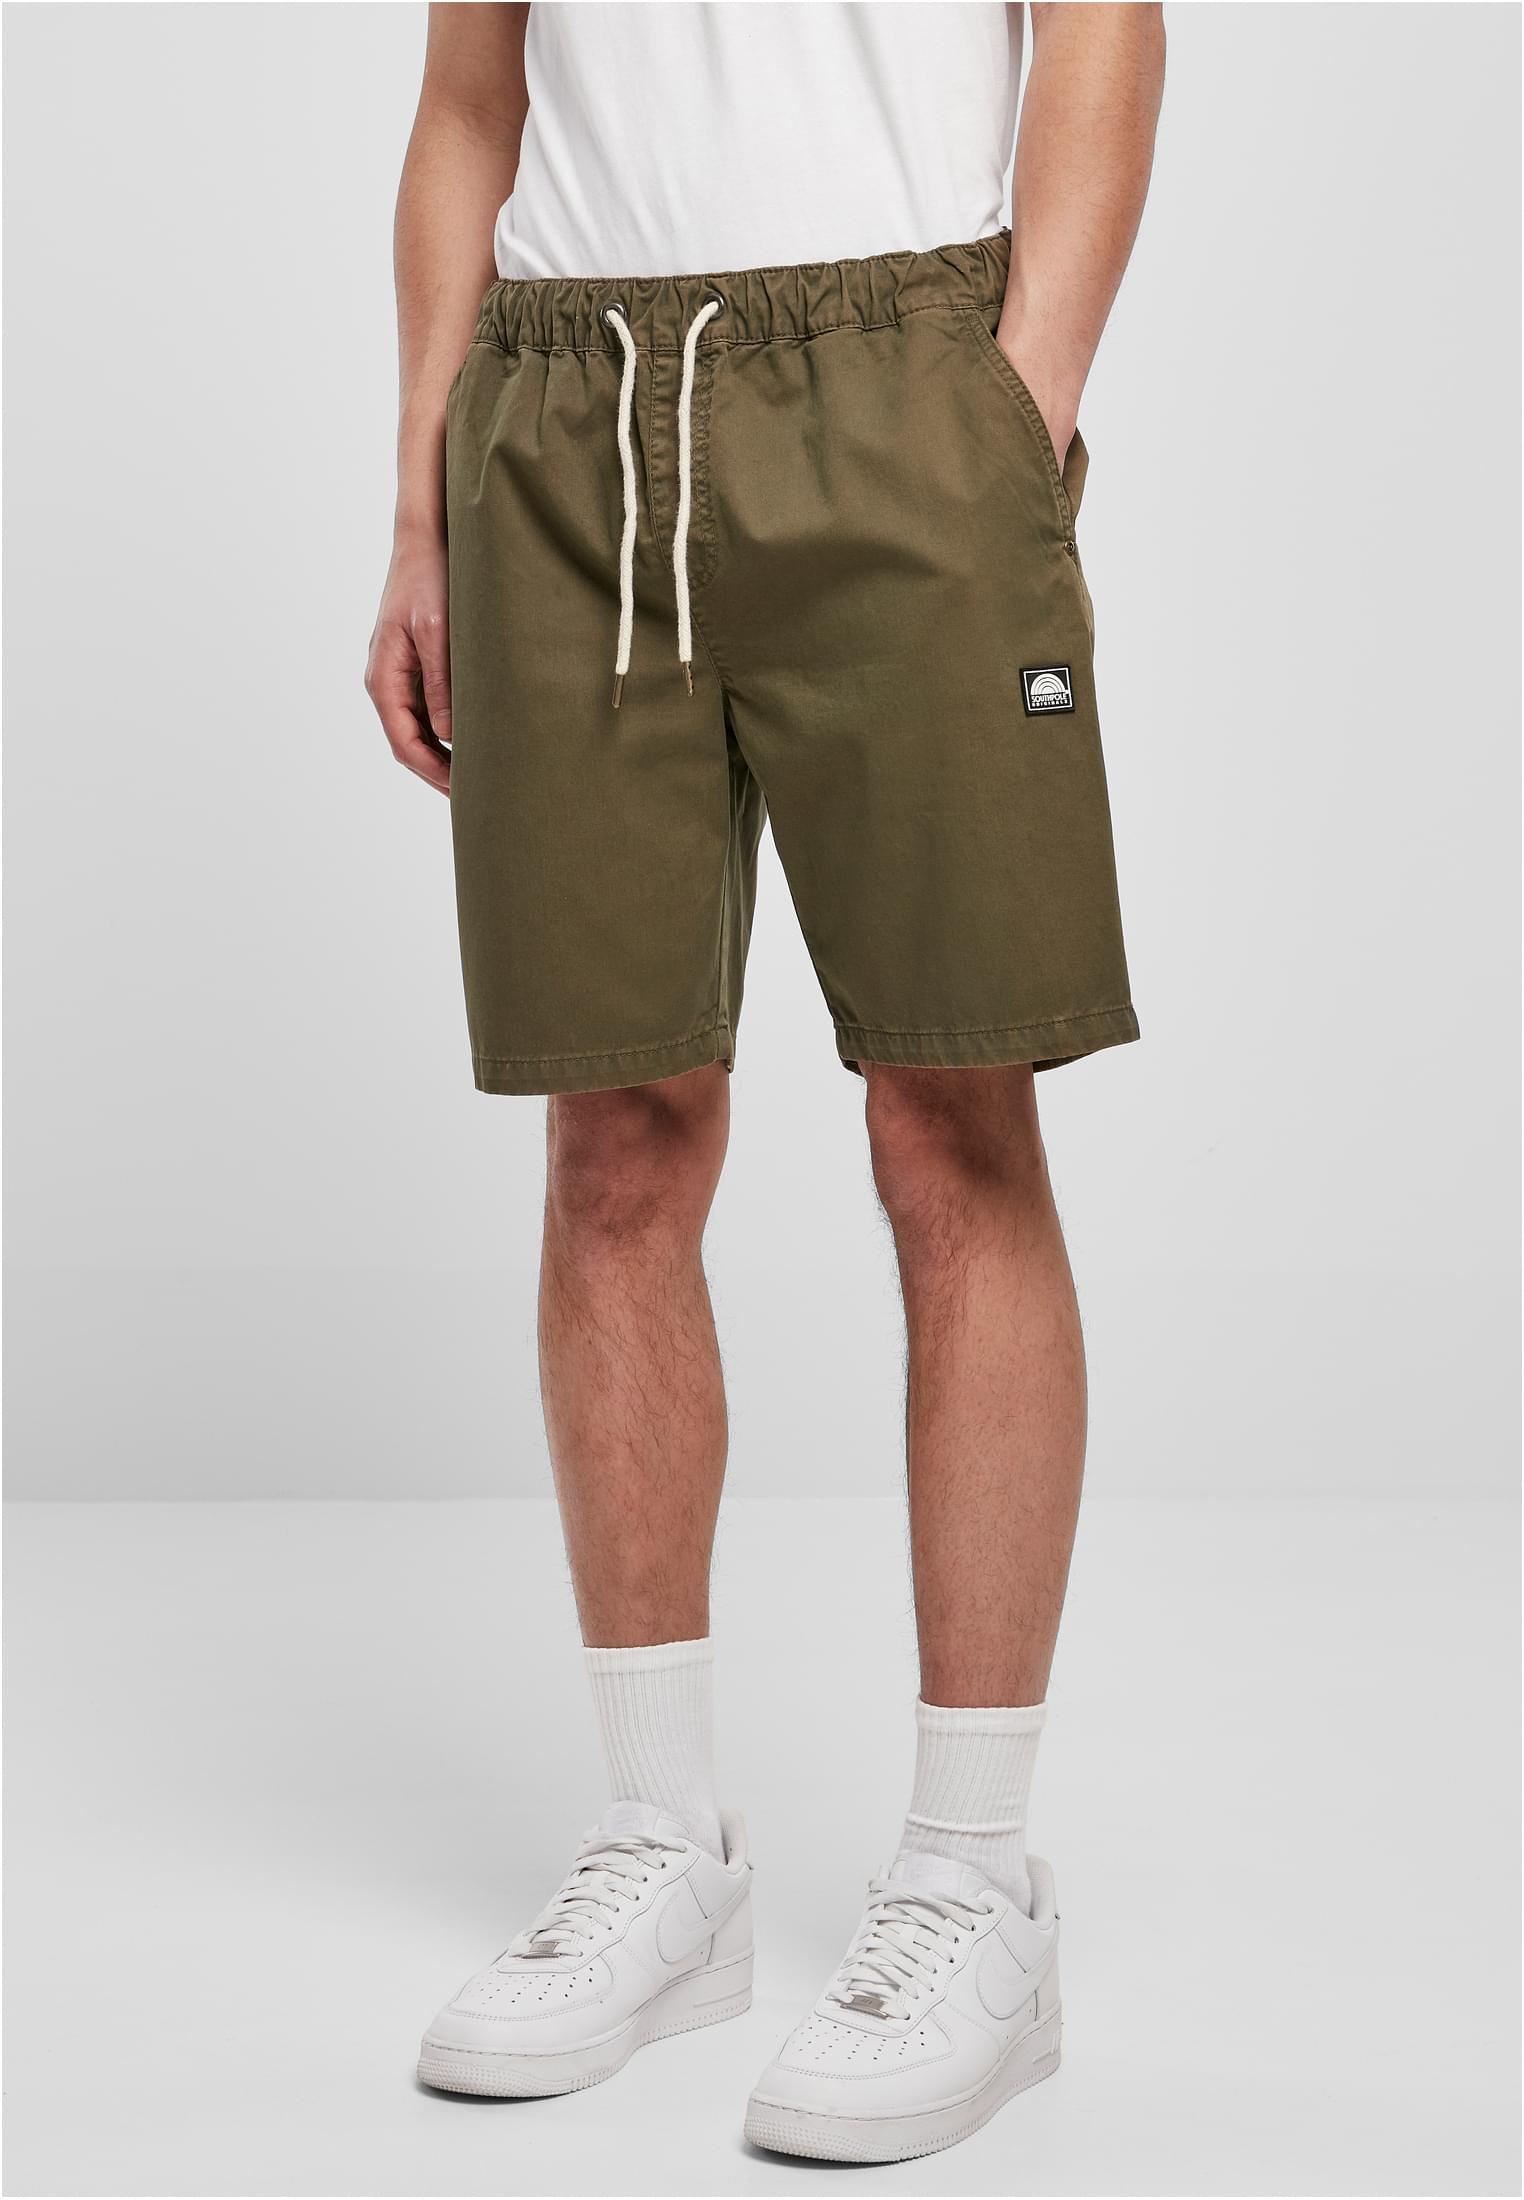 Southpole Twill Olive Shorts